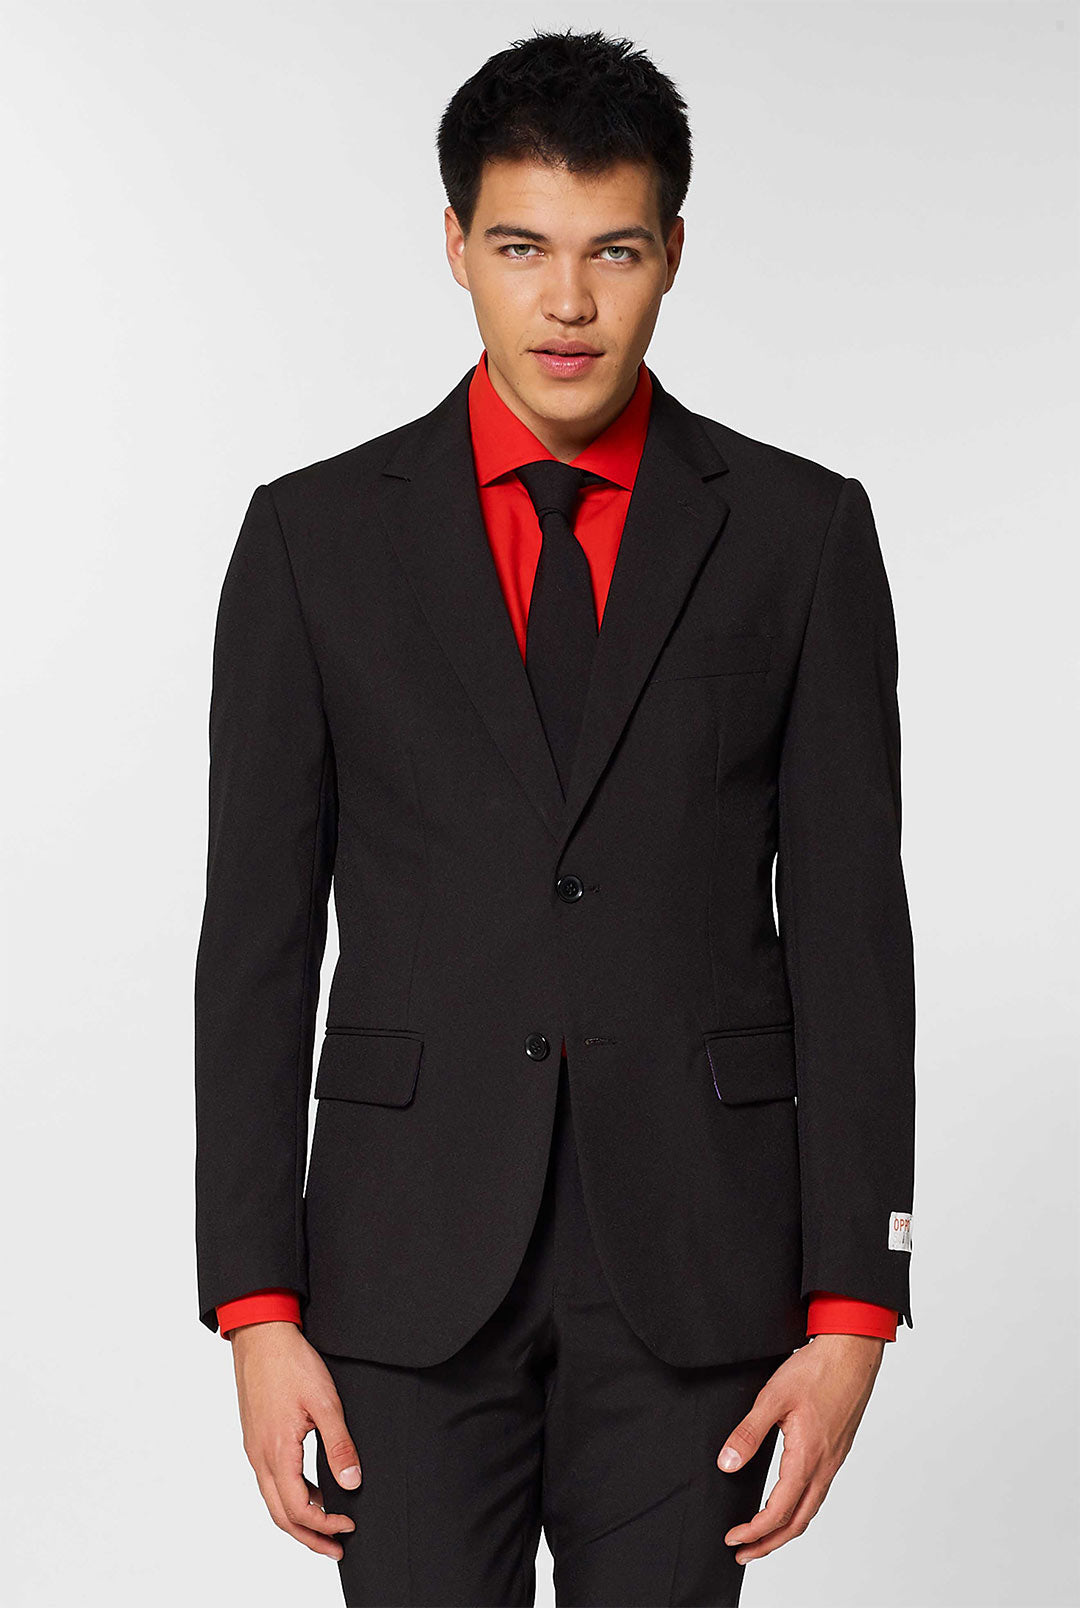 Jodhpuri Suit - Buy Latest Designer Jodhpuri Suit for men's wear Online -  Utsav Fashion